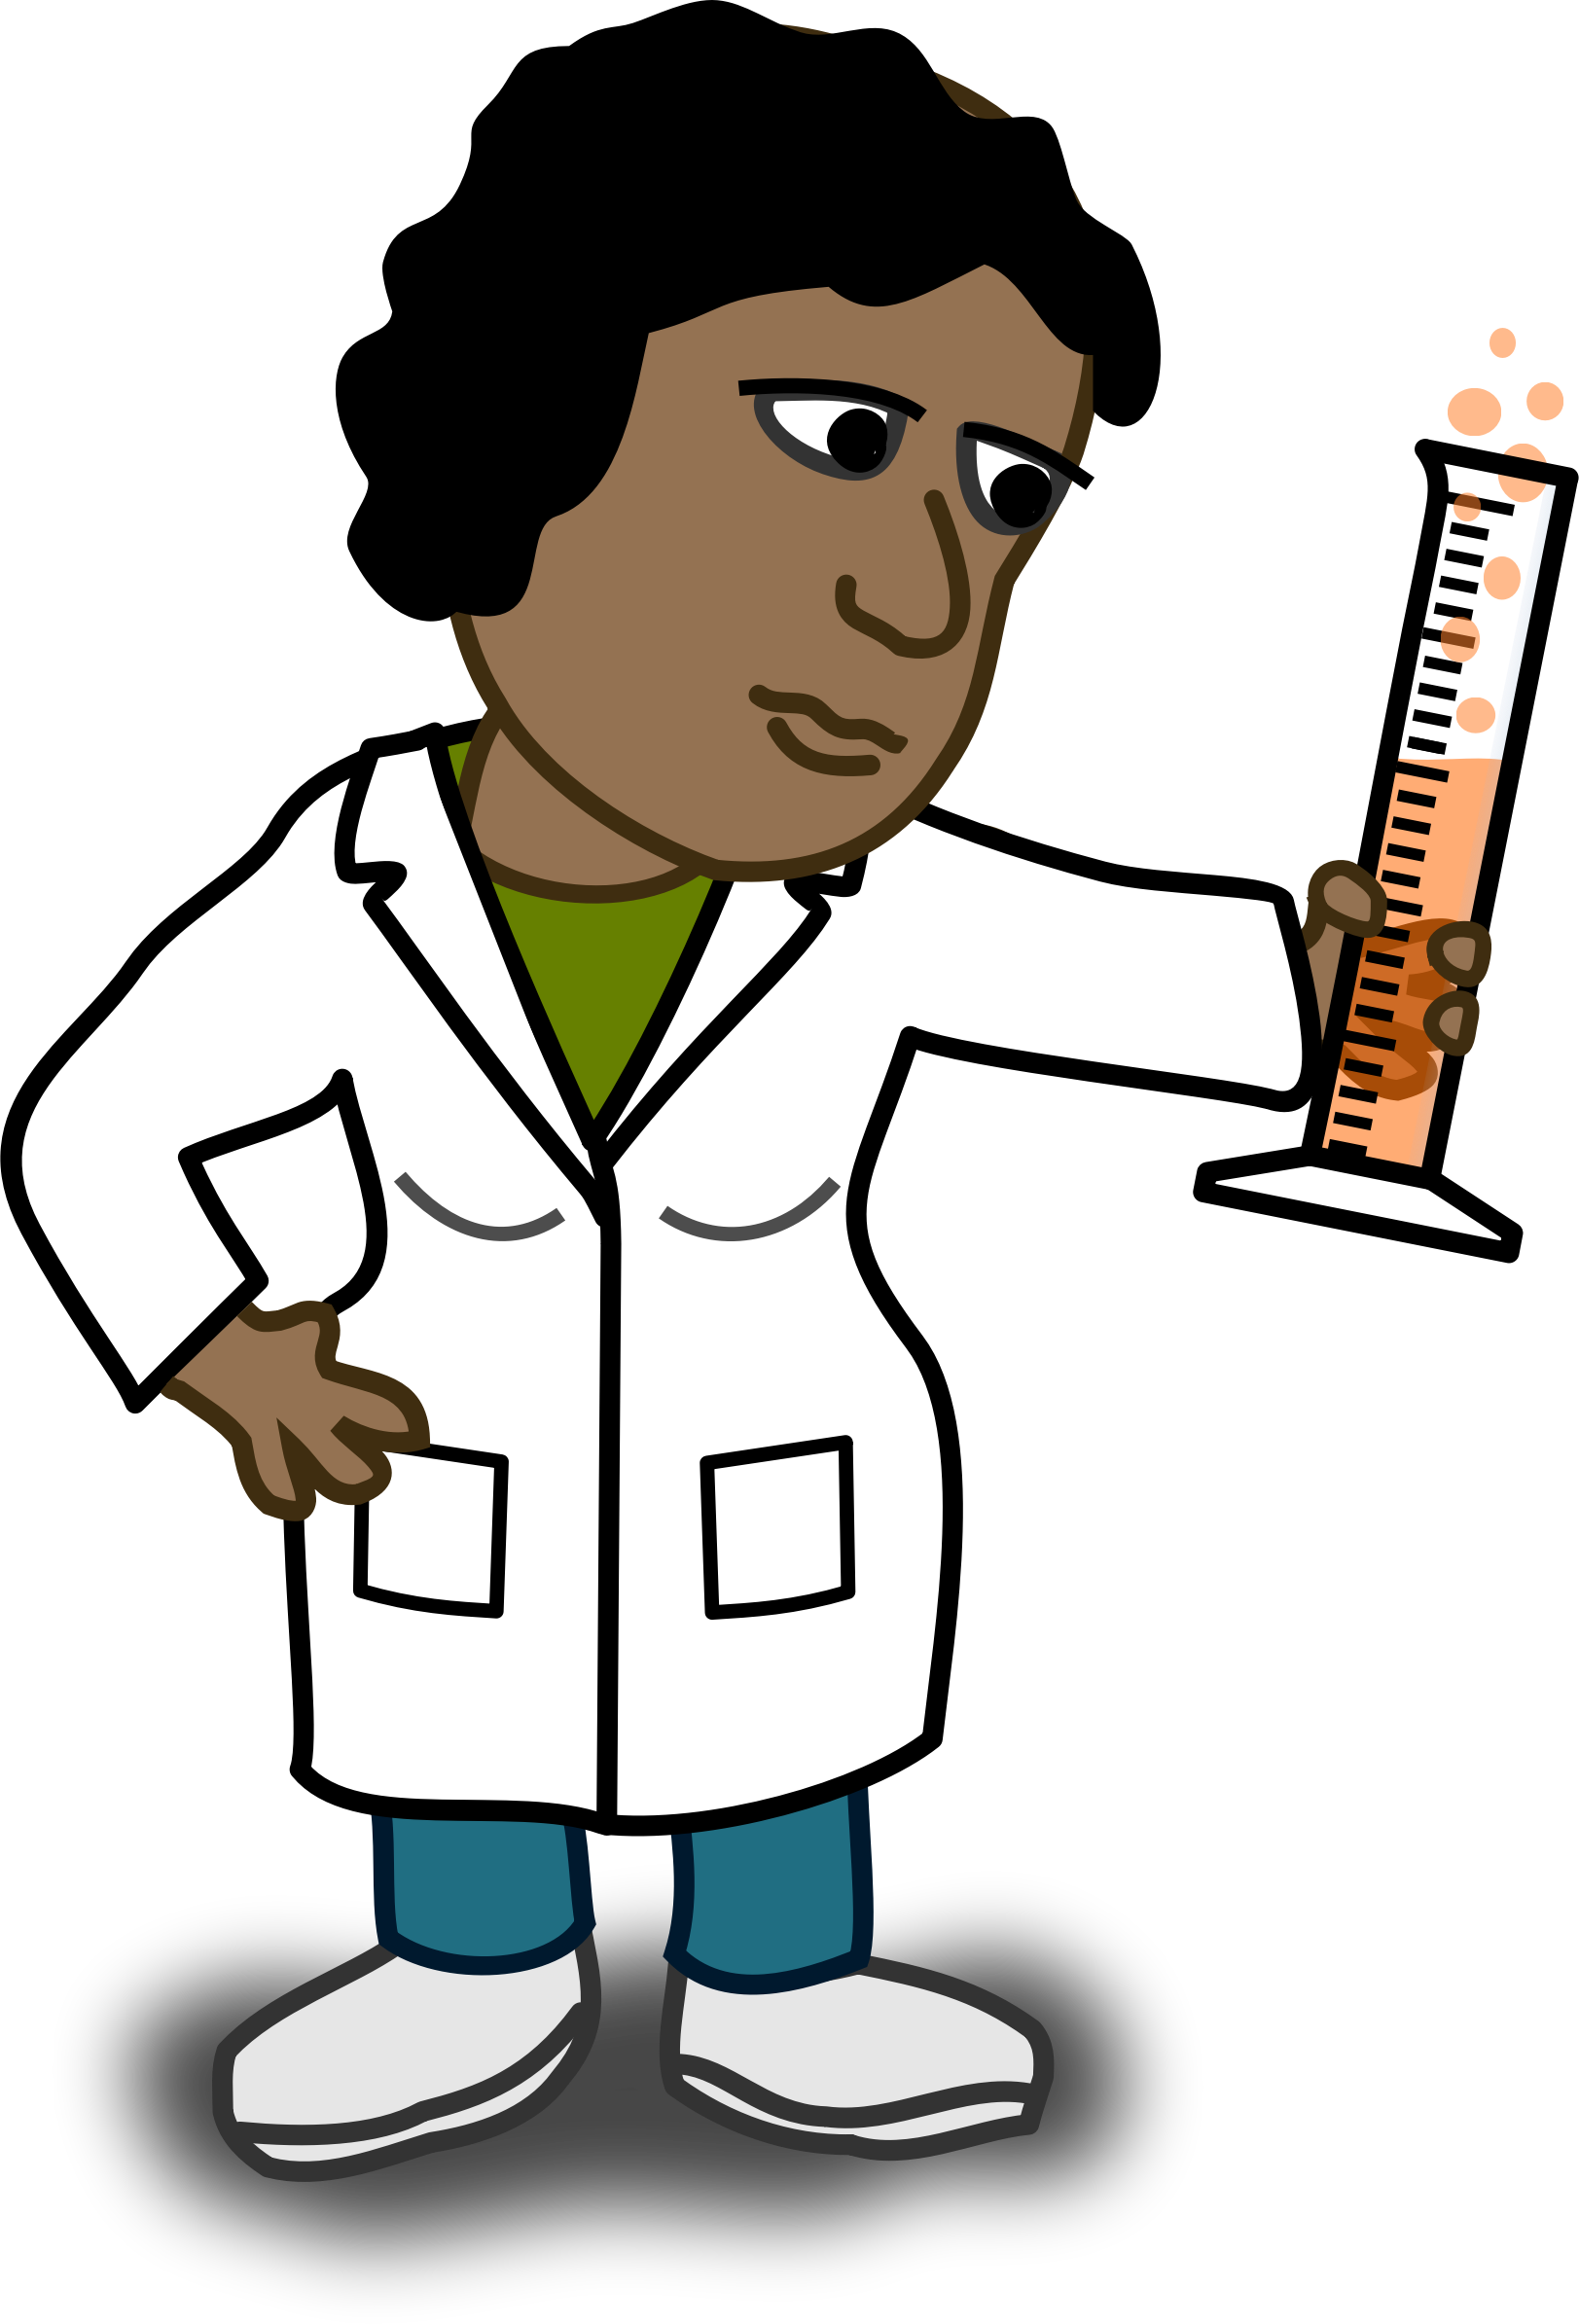 Cartoon of African-American woman scientist holding a beaker